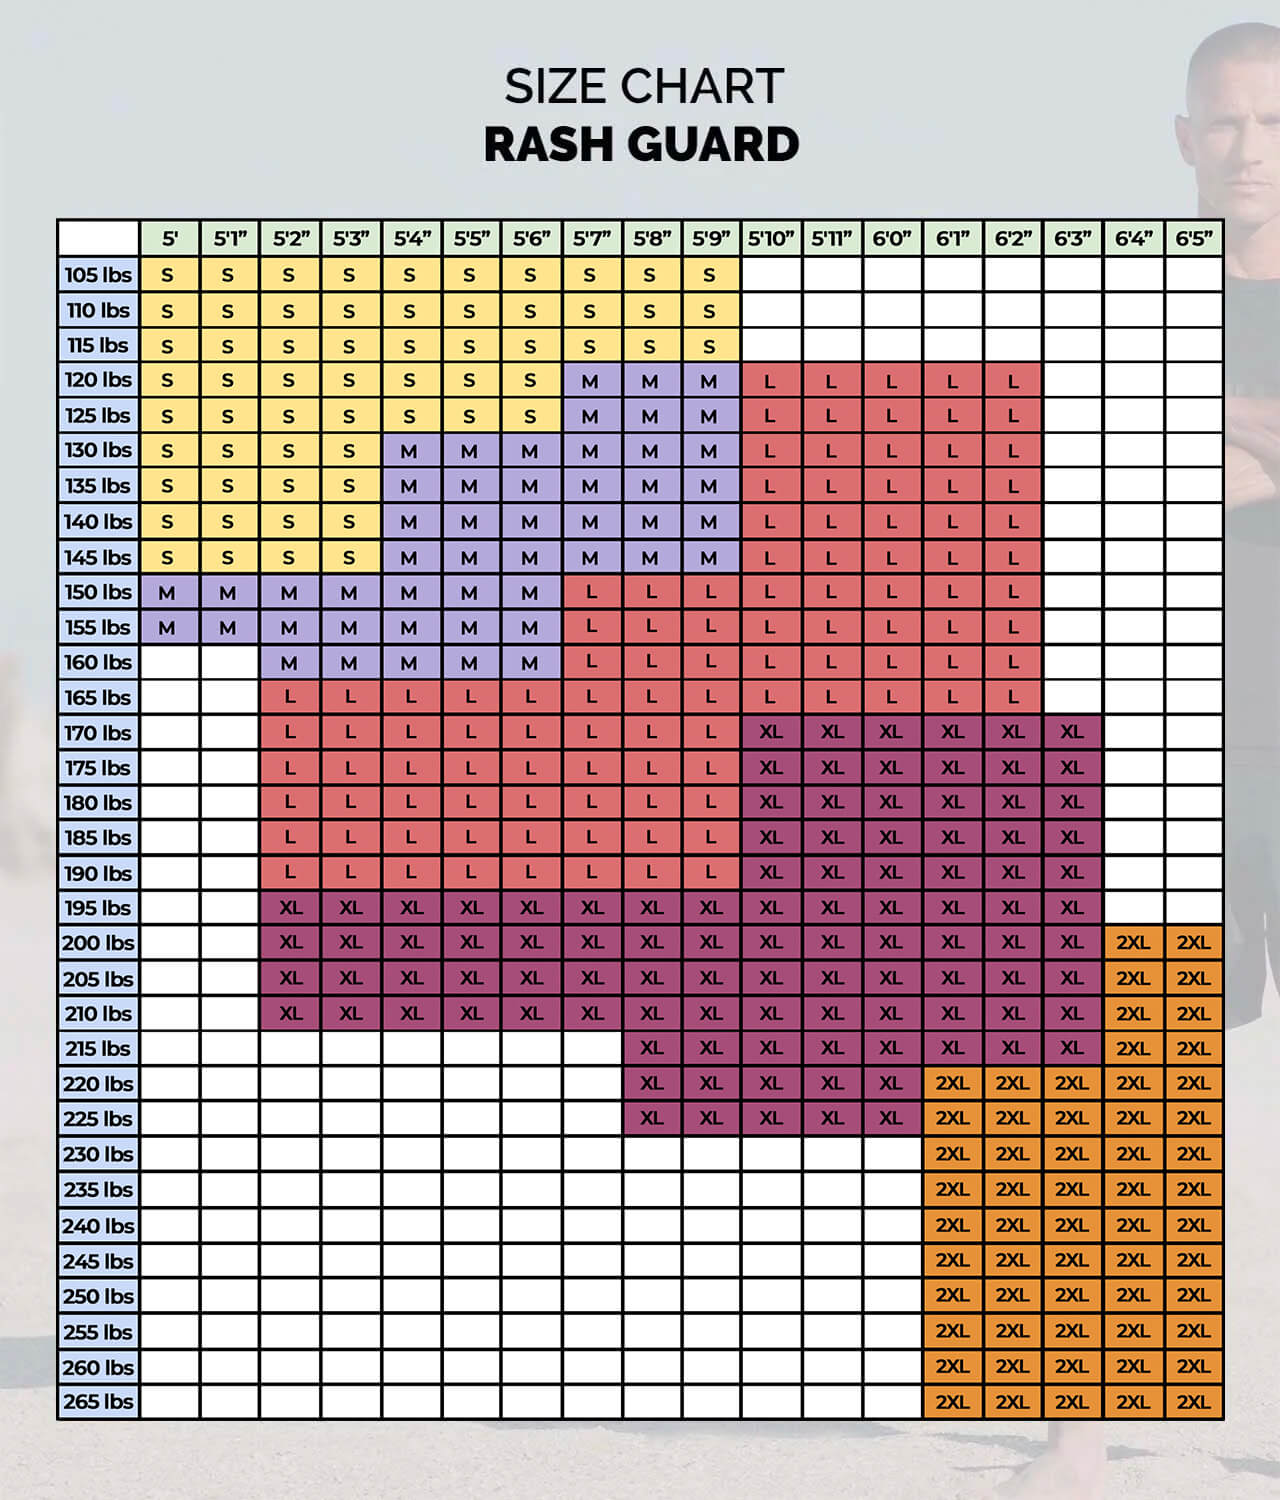 Elite Sports Men's Standard Red Long Sleeve Jiu Jitsu BJJ Rash Guard Size Guide